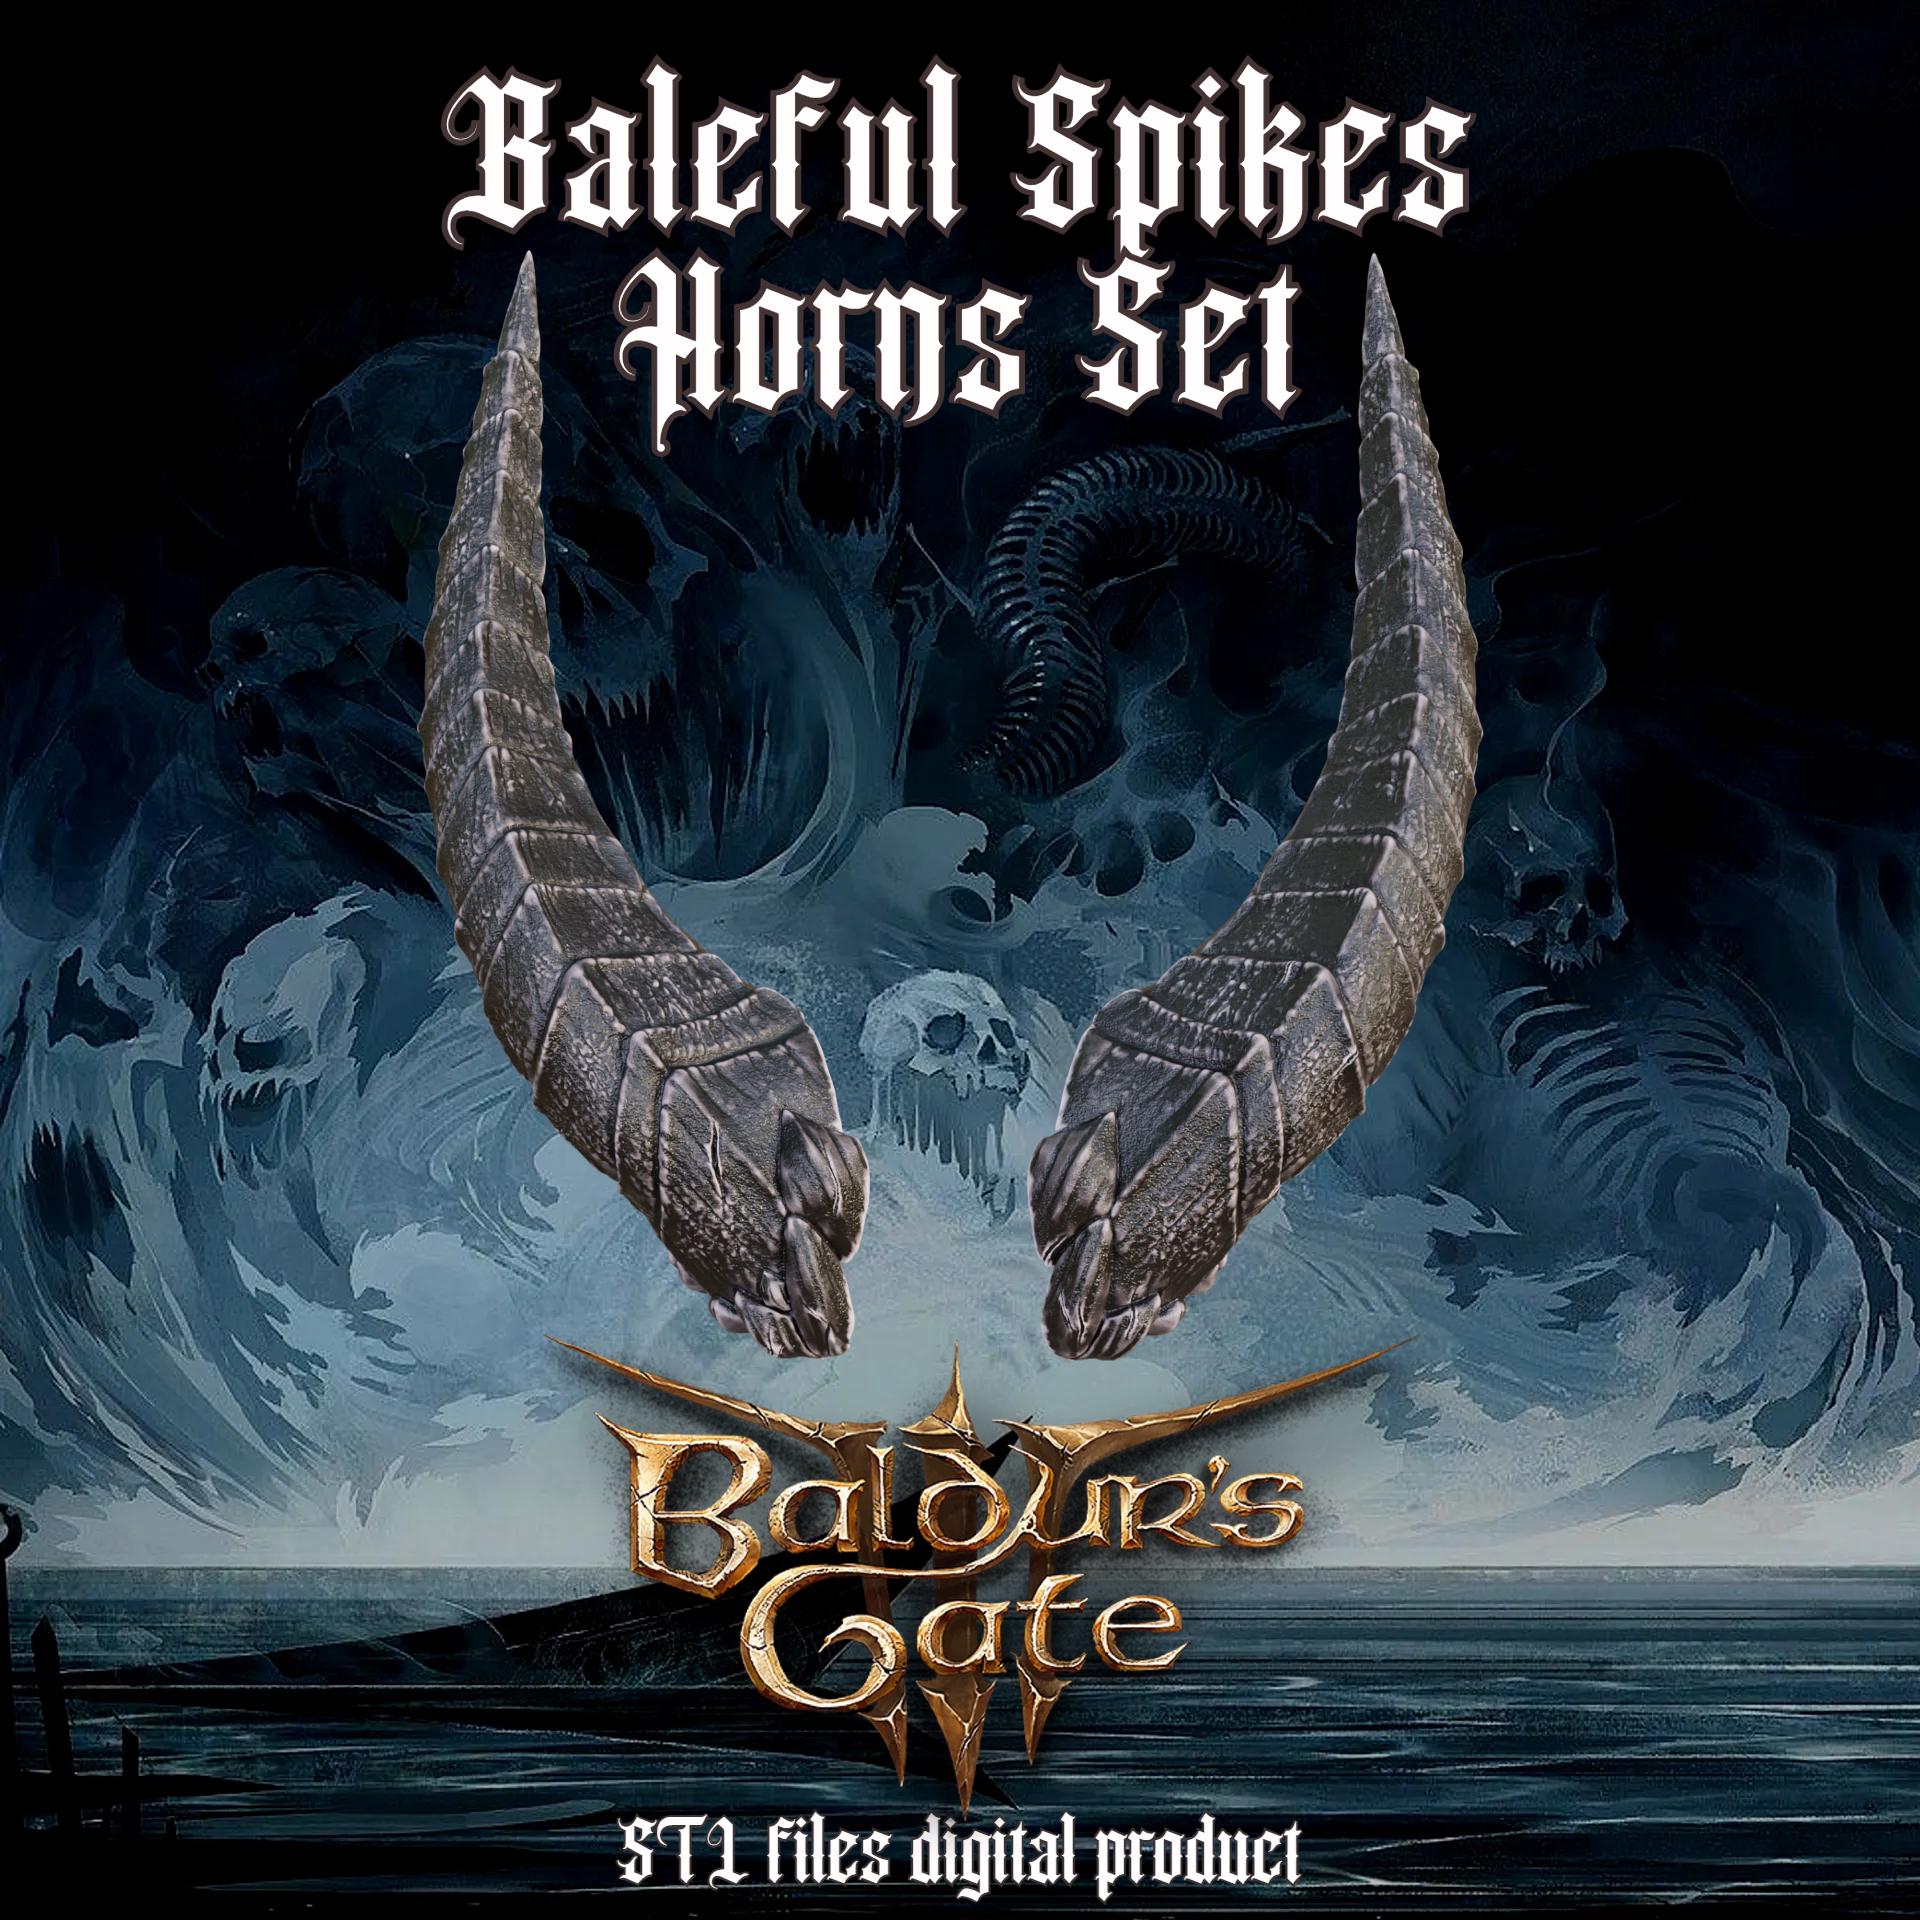 FANTASY BALEFUL SPIKES HORNS SET BALDURS GATE 3 3d model